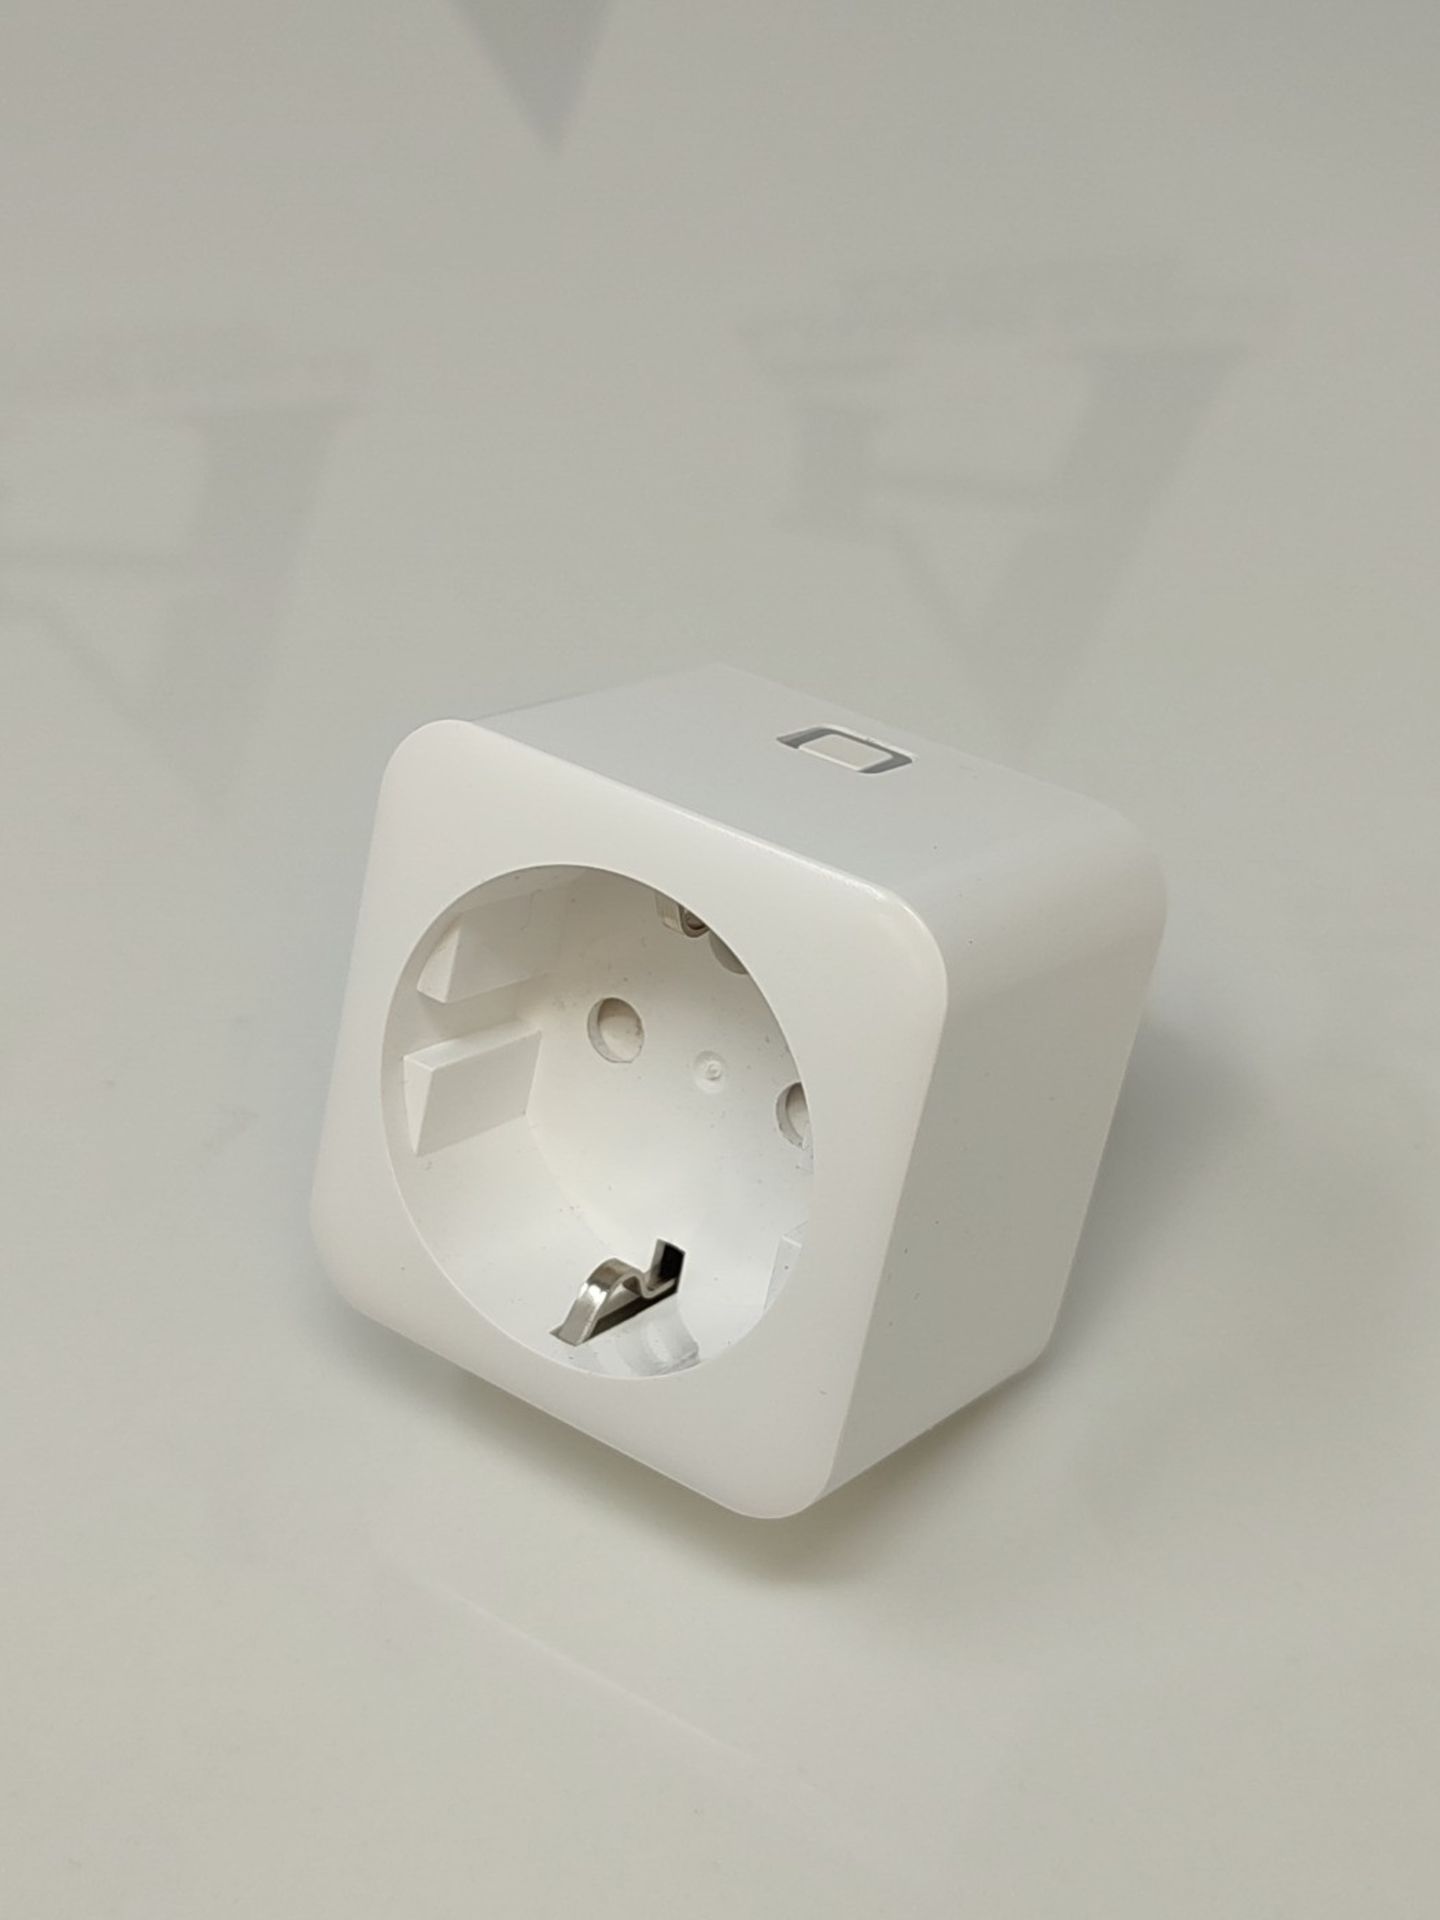 AduroSmart Smart plug dimmable and compatible with AduroSmart, Hue, and Alexa, white, - Image 3 of 3